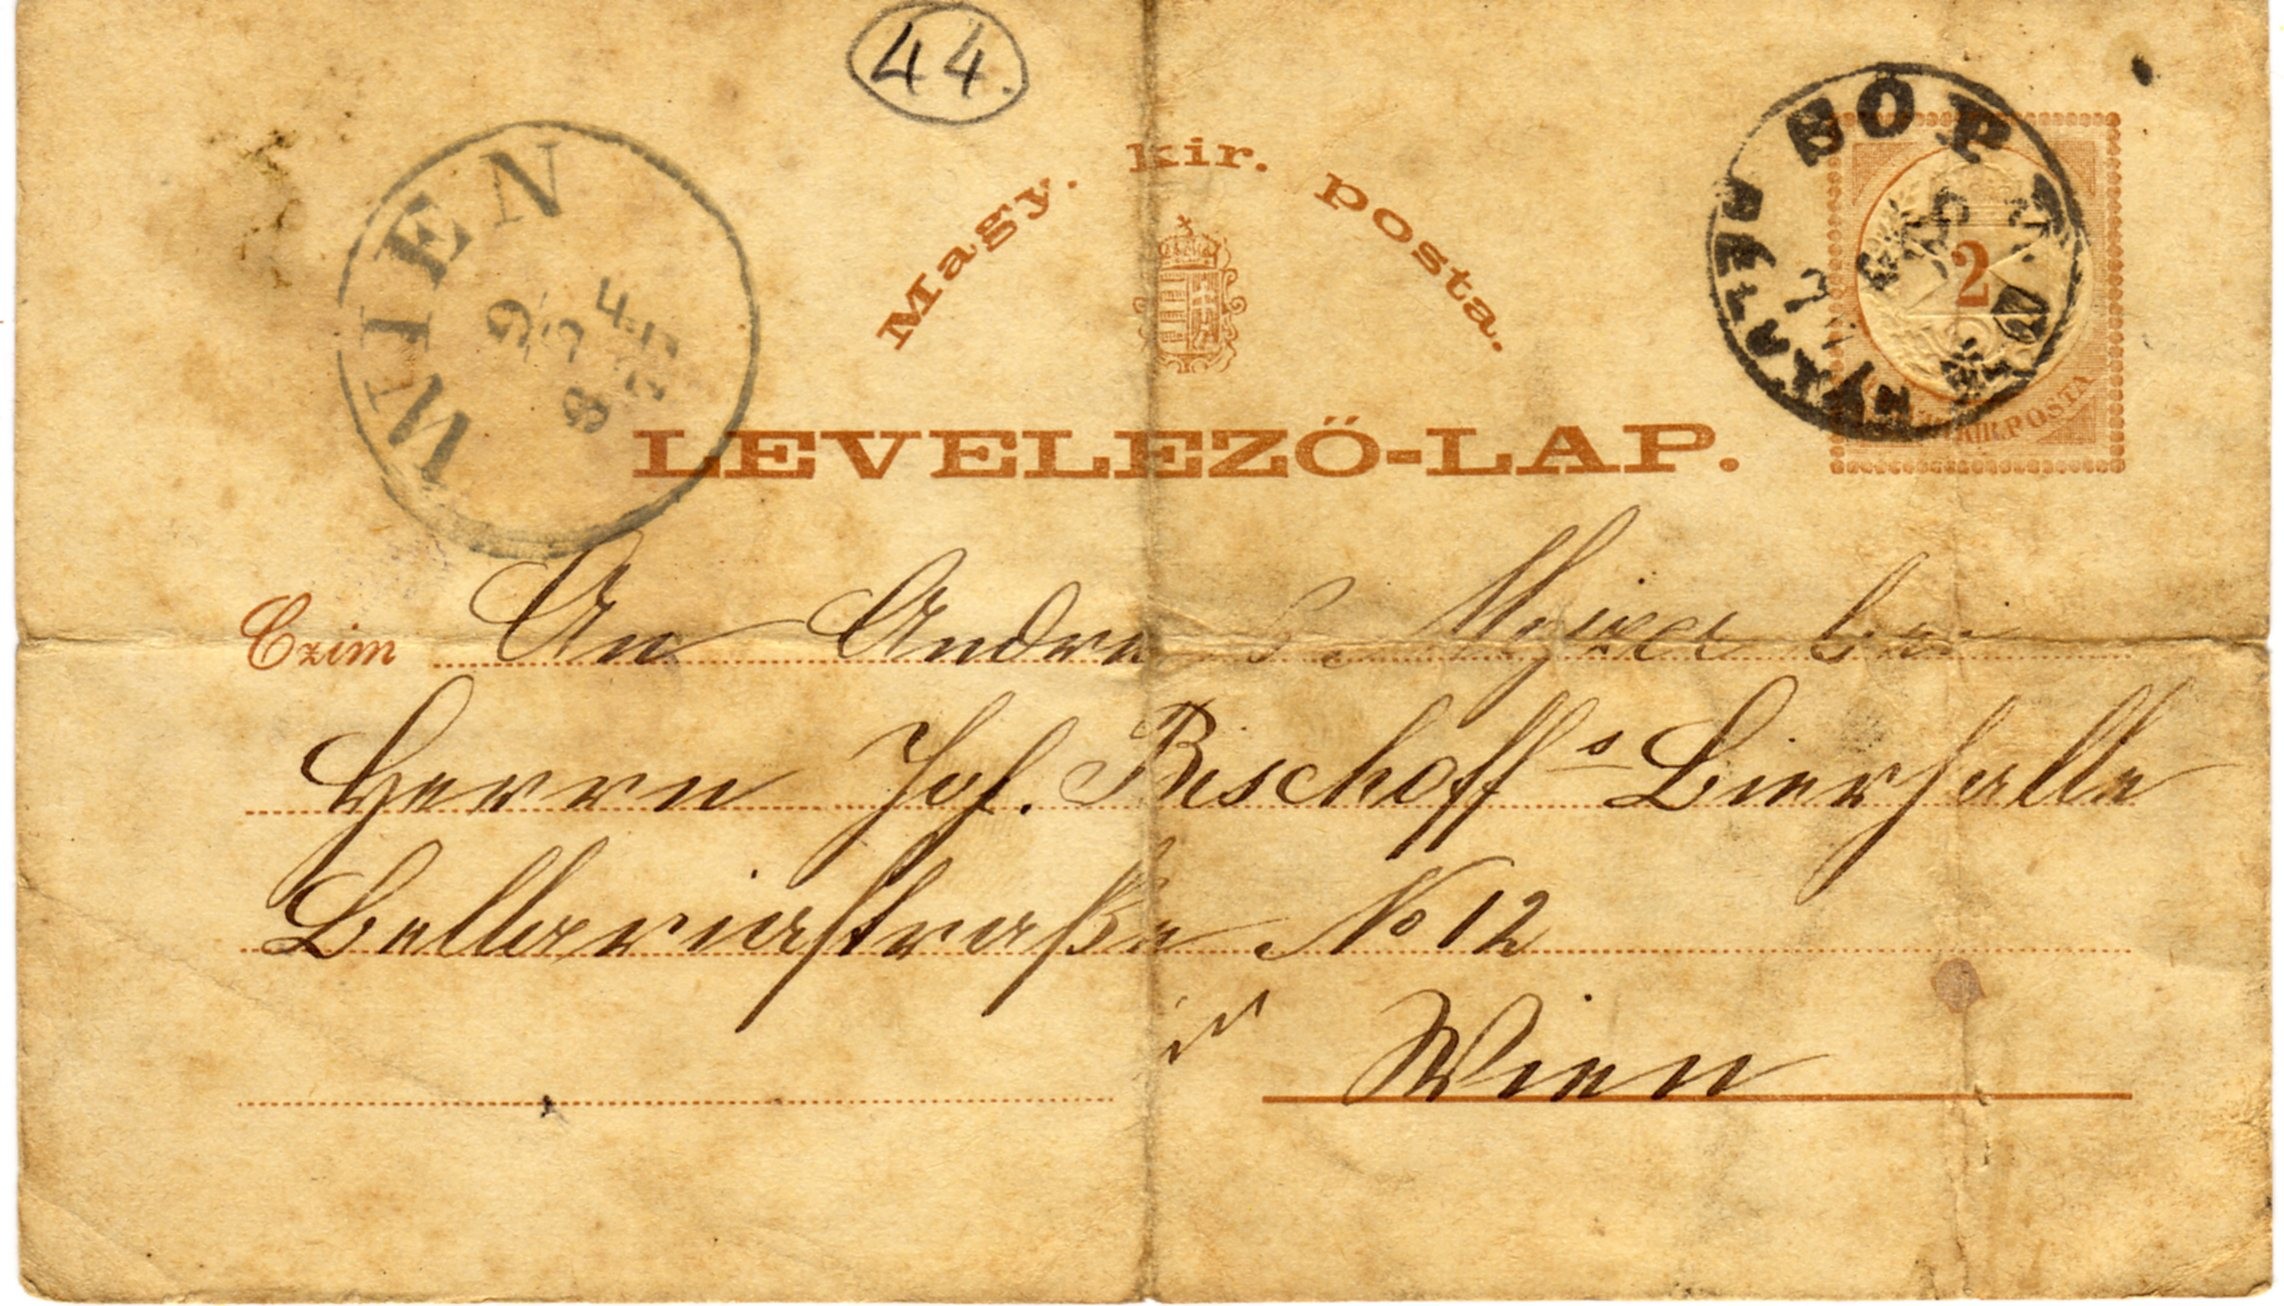 Levelezőlap (Tapolcai Városi Múzeum CC BY-NC-SA)